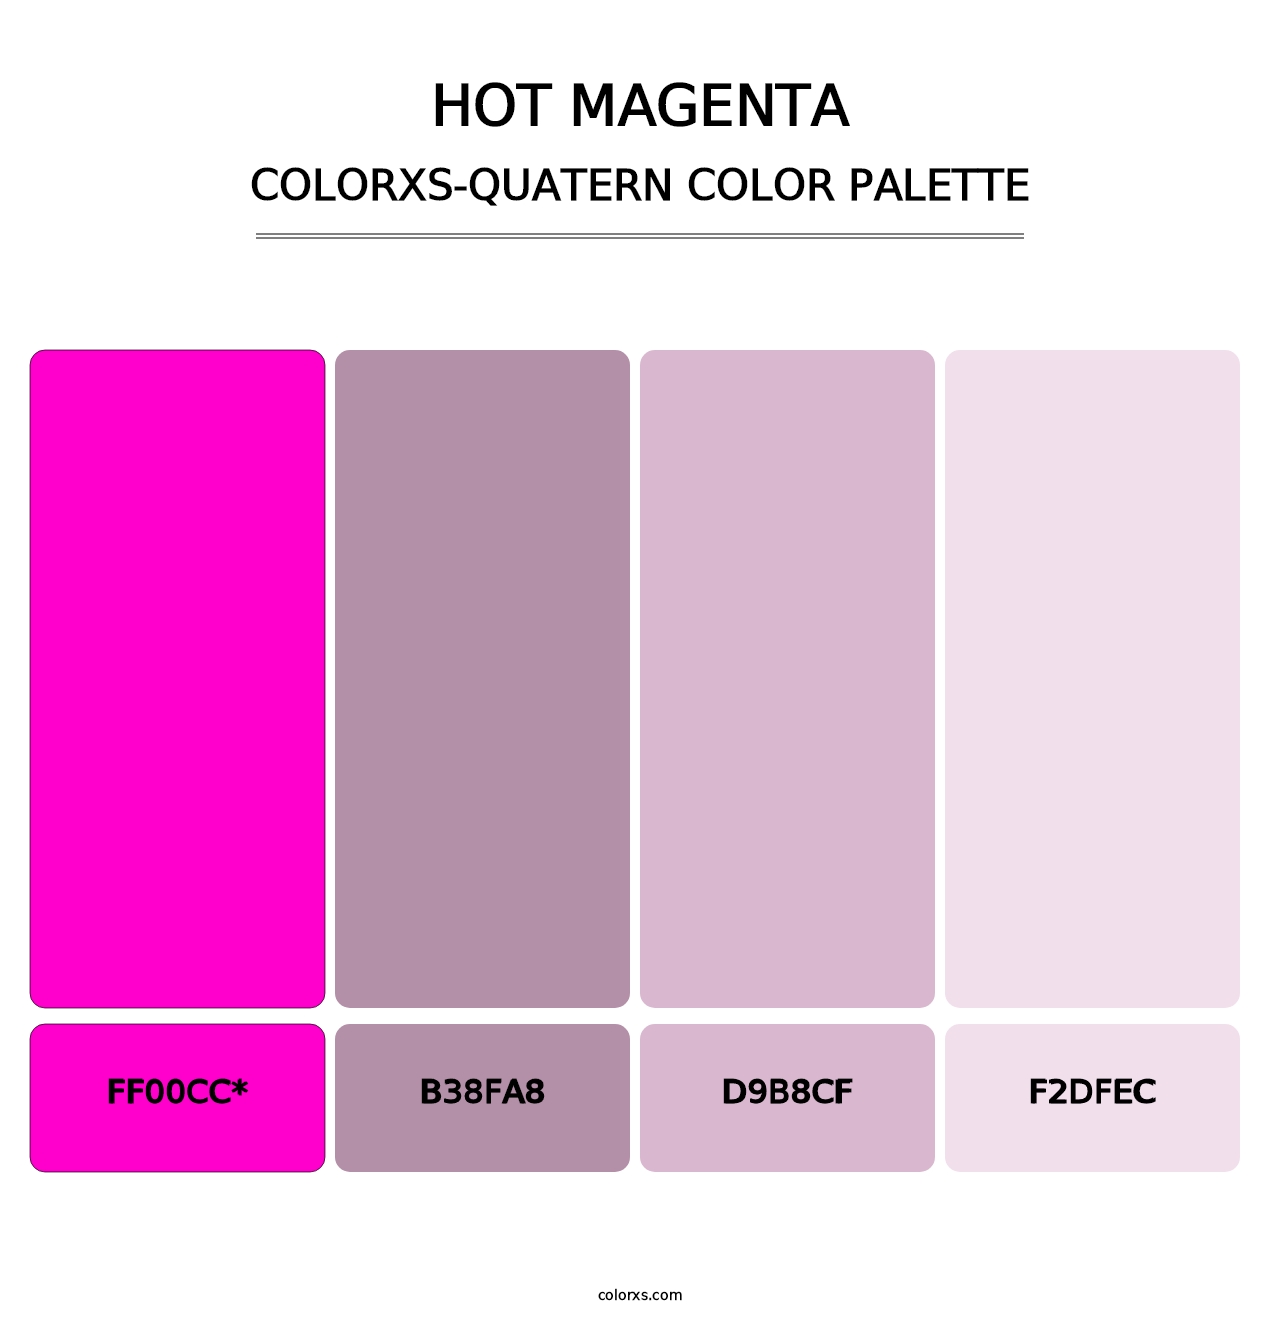 Hot Magenta - Colorxs Quatern Palette